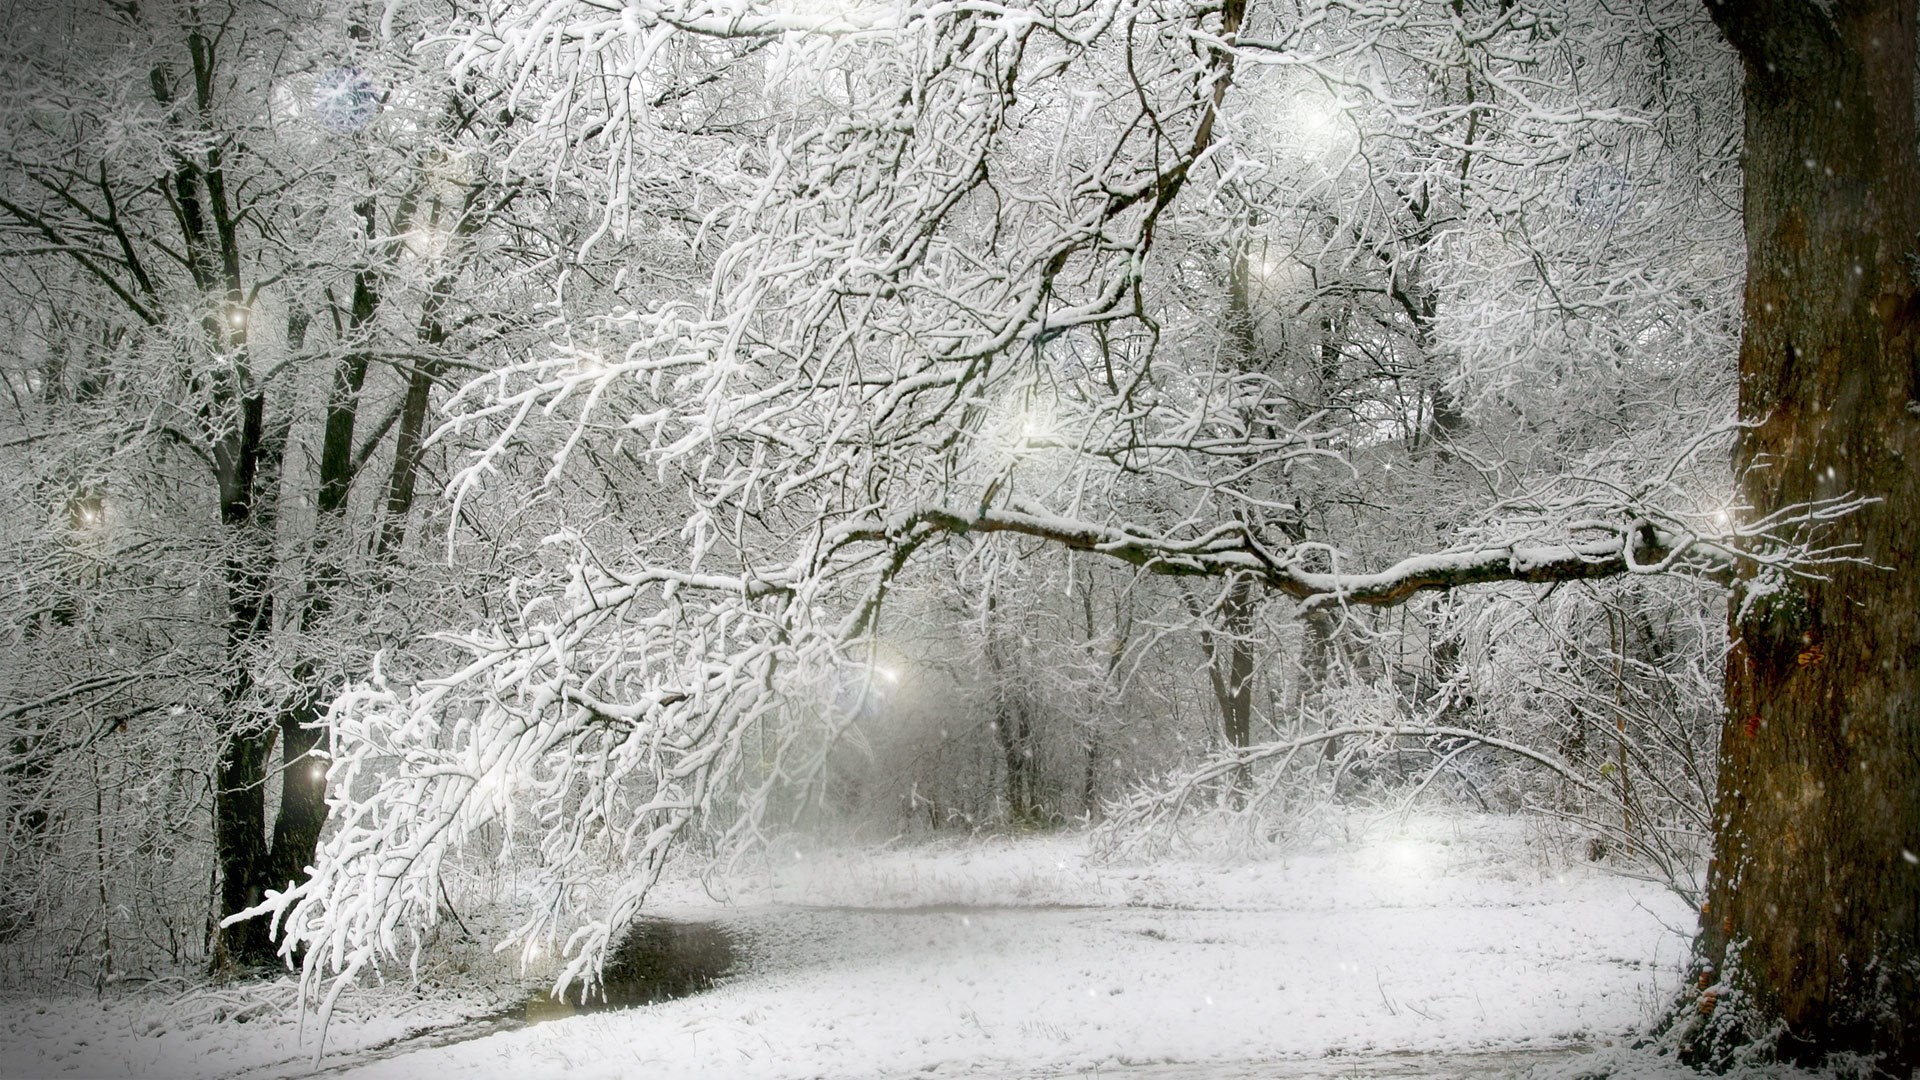 1920x1080 1920 x 1080 px winter snow scenes wallpaper: Full HD Pictures by Lawton  Kingsman